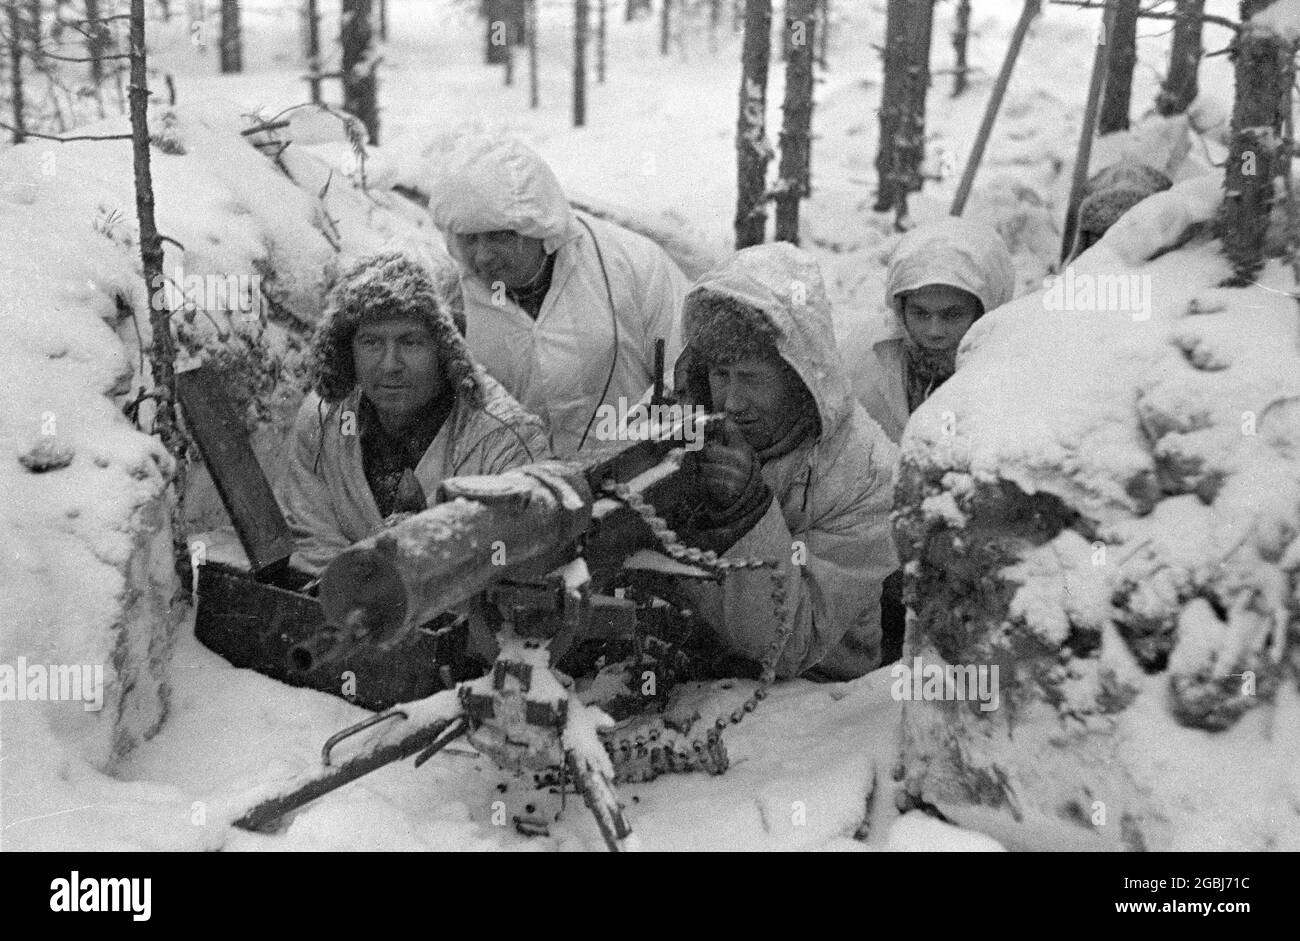 NEAR LEMETTI, FINLAND - 21 February 1940 - A Finnish Maxim M-32-33 machine gun nest 100 metres from Soviet forces during the Winter War between Finlan Stock Photo